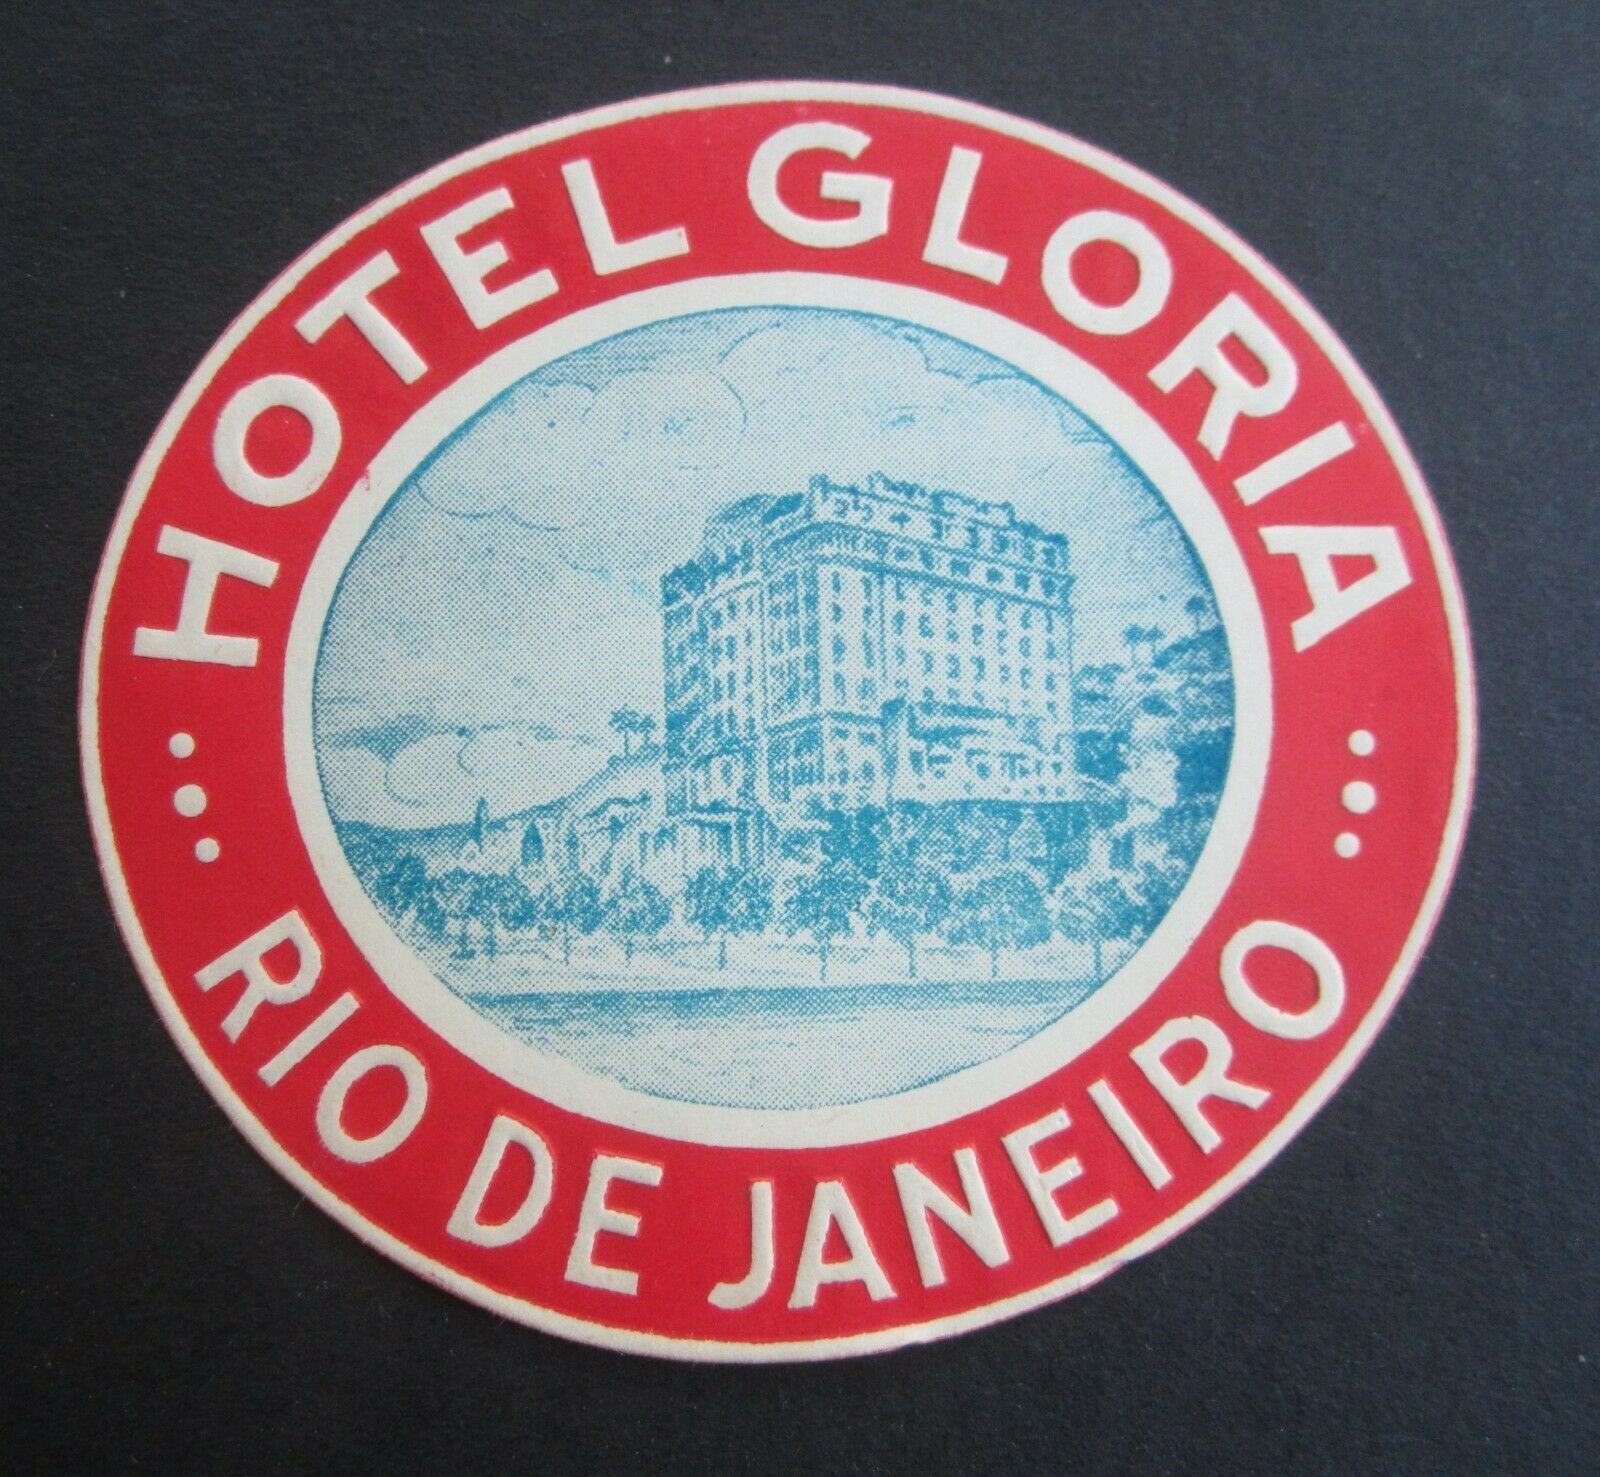  Old Vintage - HOTEL GLORIA - Rio De Janeiro - ...